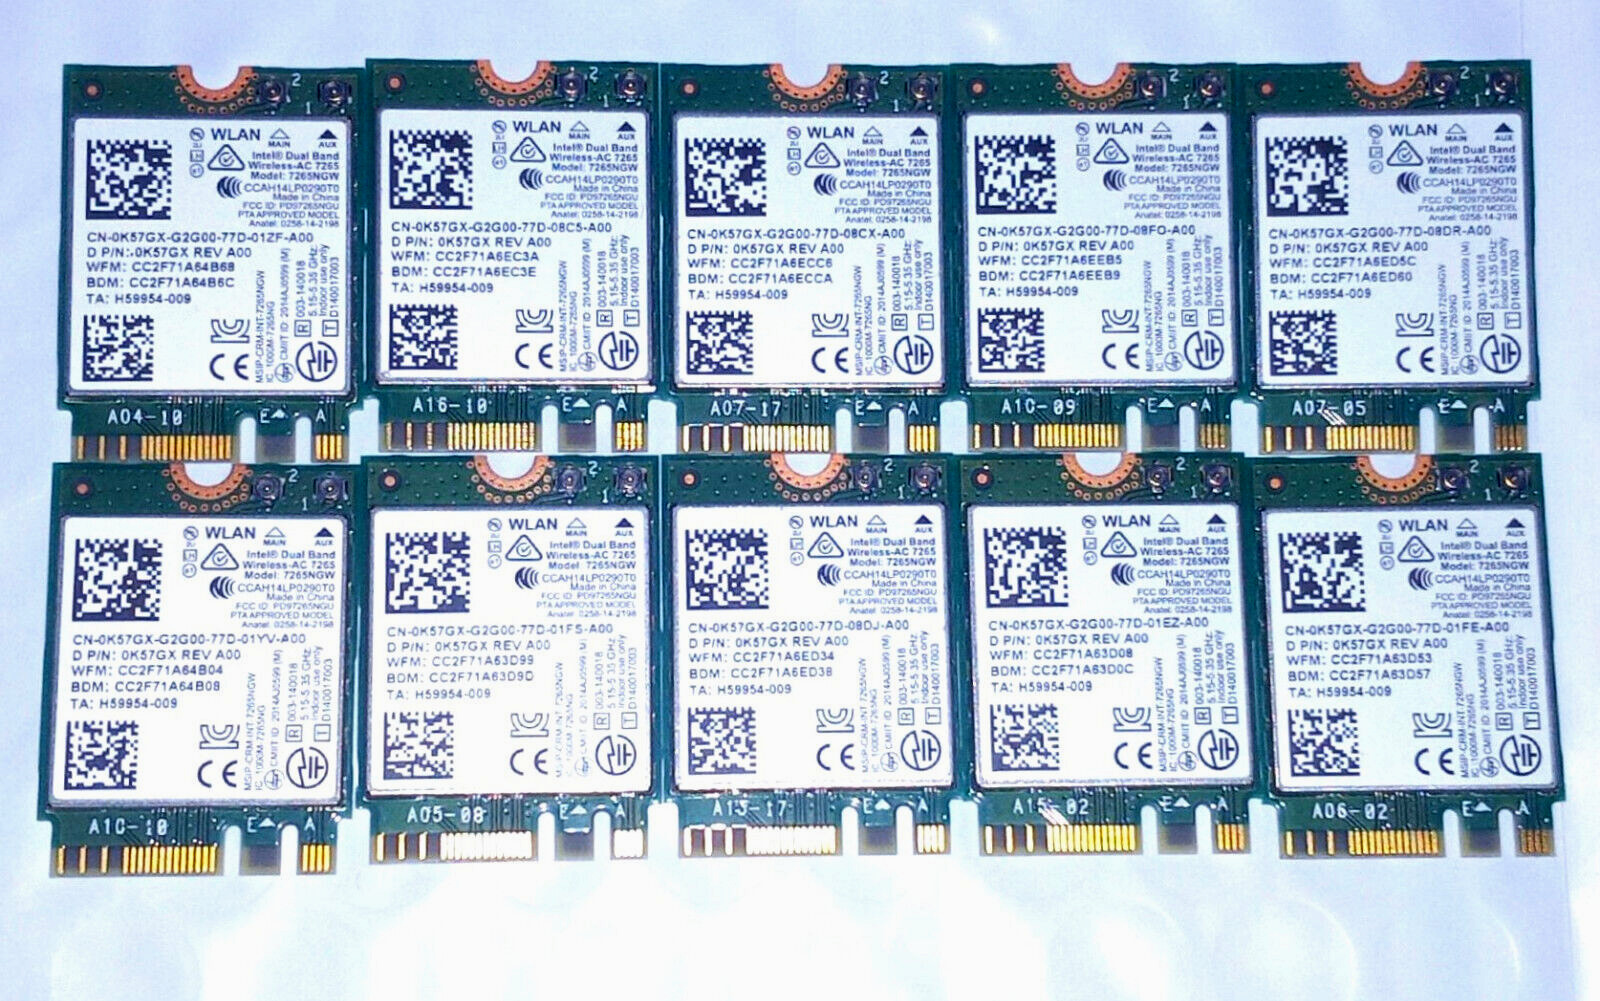 Lot of 10 Intel Dual Band Wireless-AC 7265 802.11ac WiFi + Bluetooth Cards